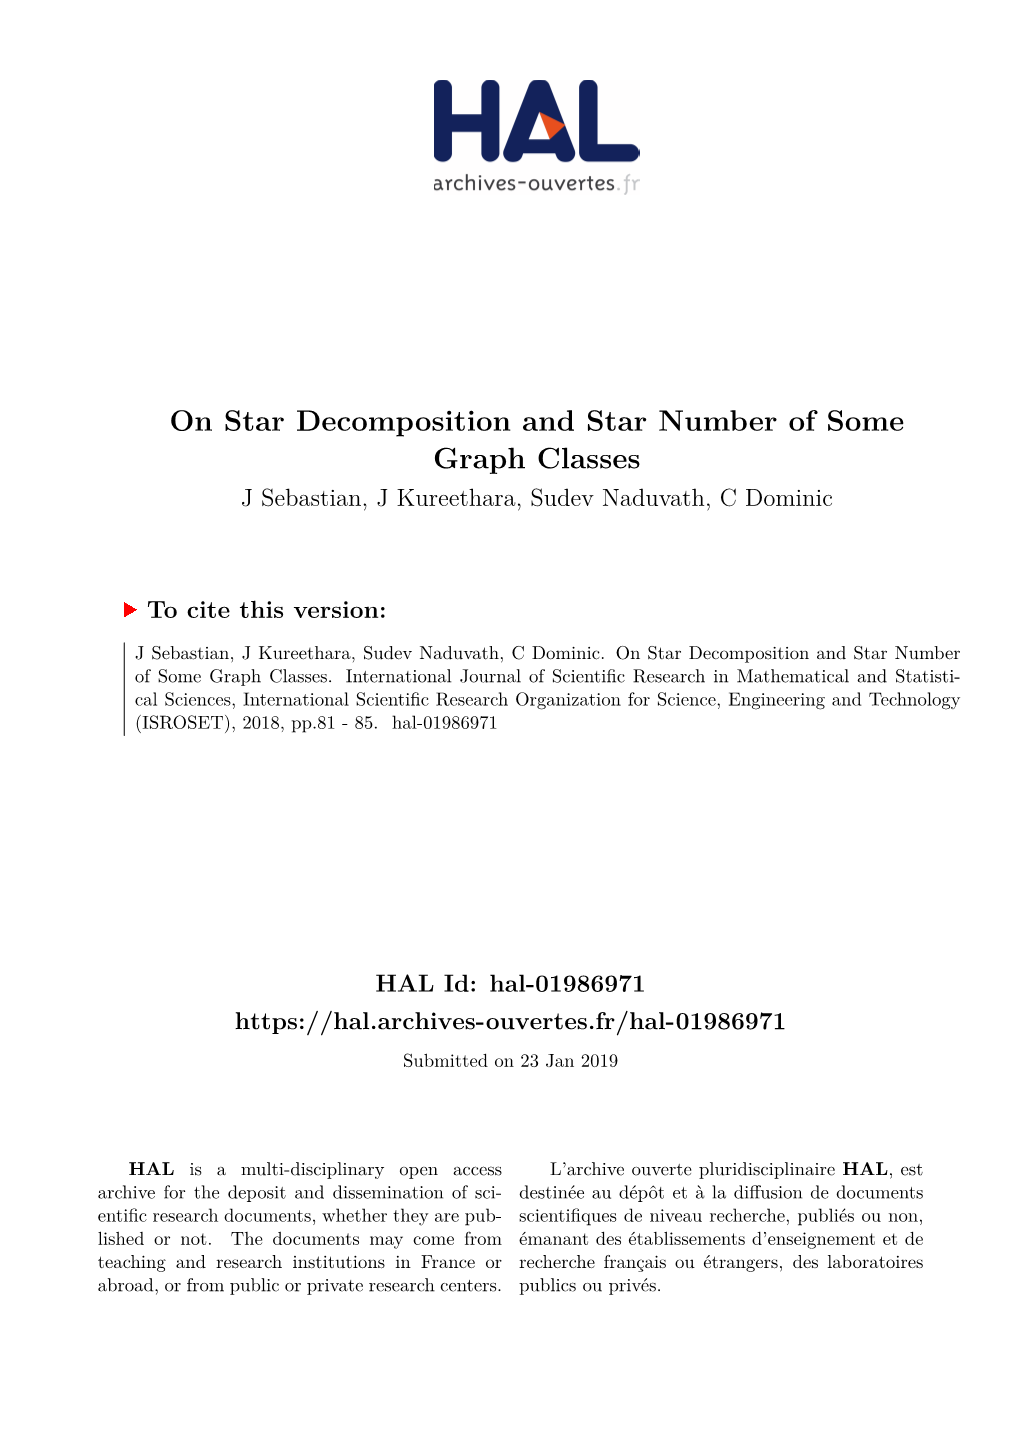 On Star Decomposition and Star Number of Some Graph Classes J Sebastian, J Kureethara, Sudev Naduvath, C Dominic